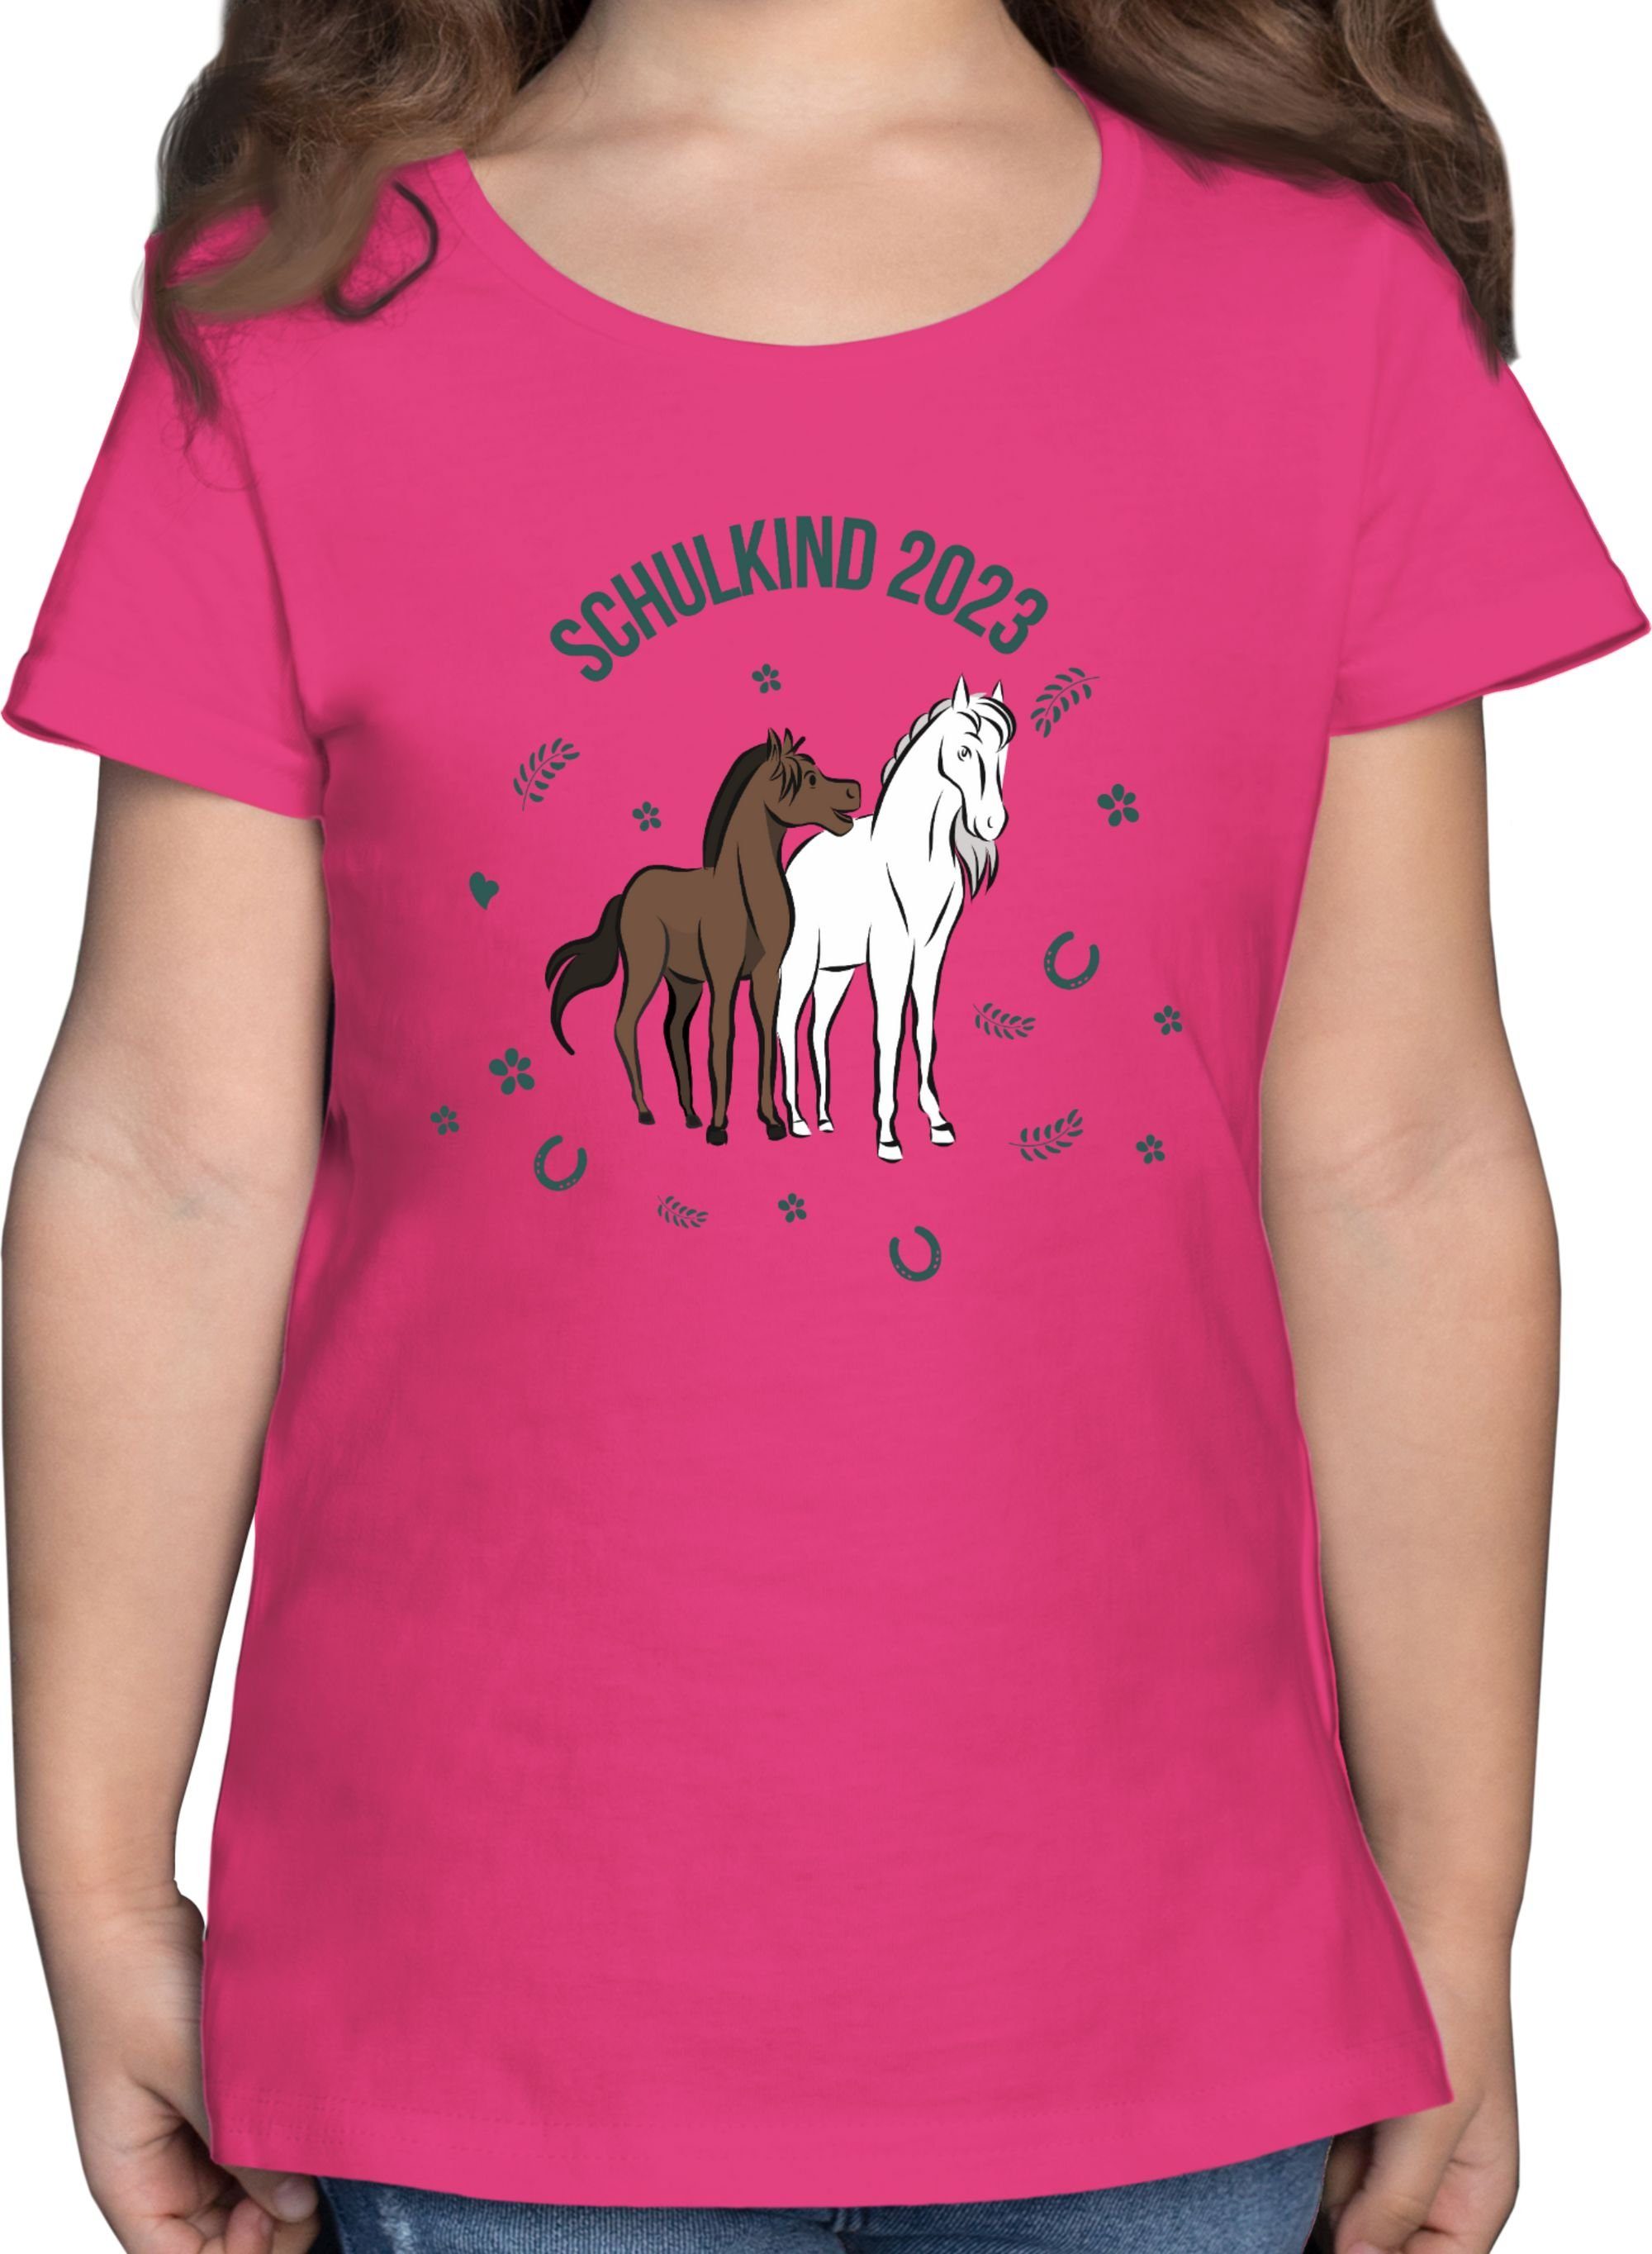 T-Shirt Mädchen Pferde Shirtracer 2023 1 Einschulung Schulkind Fuchsia